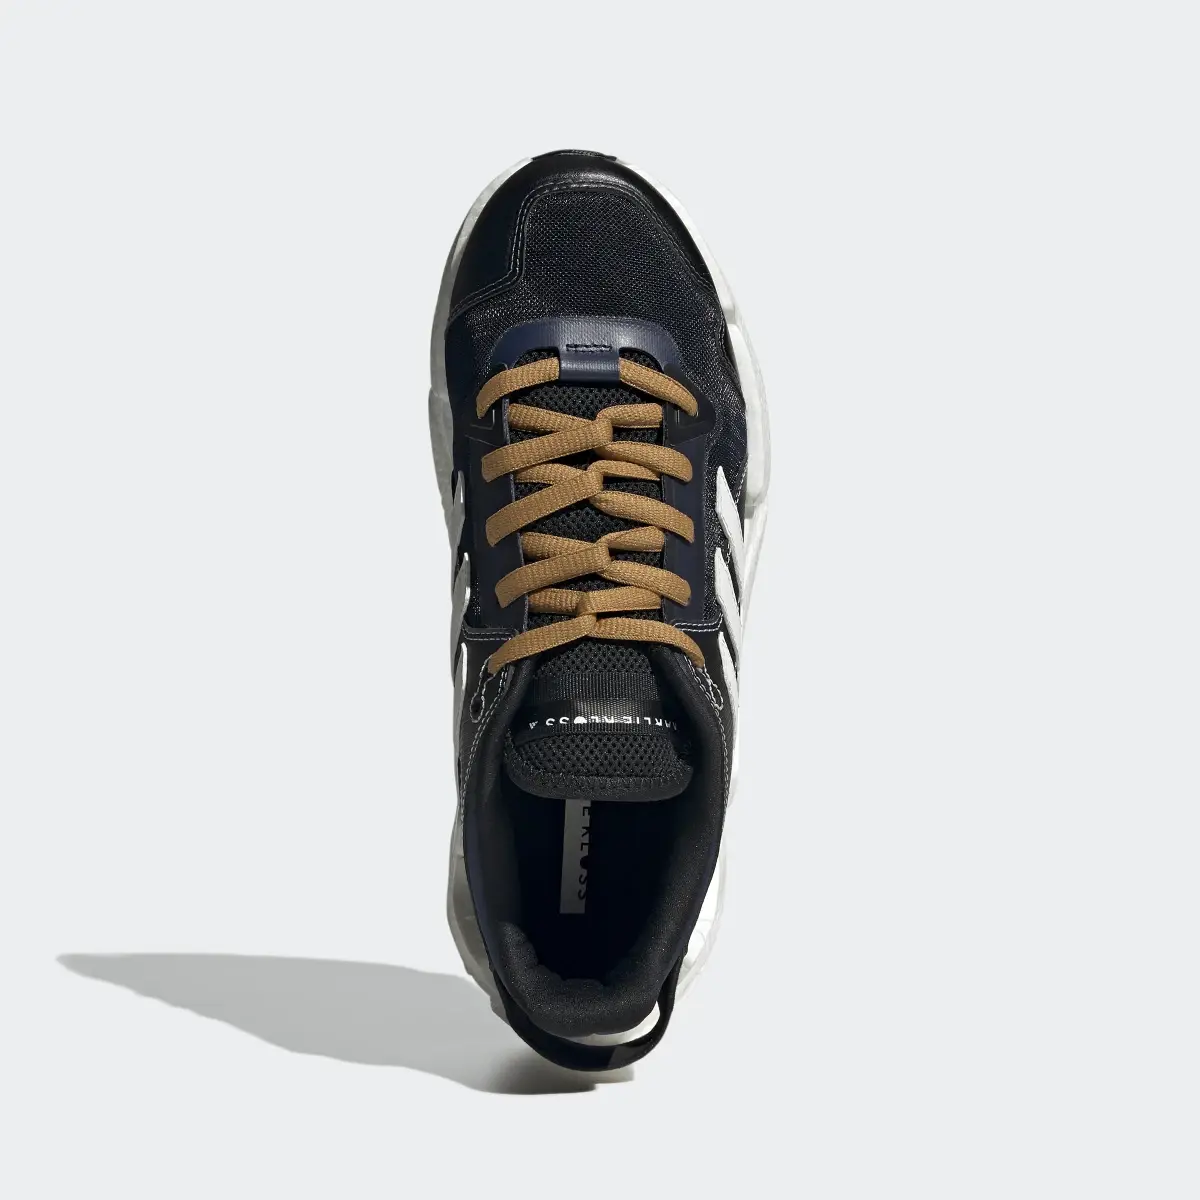 Adidas Karlie Kloss X9000 Shoes. 3